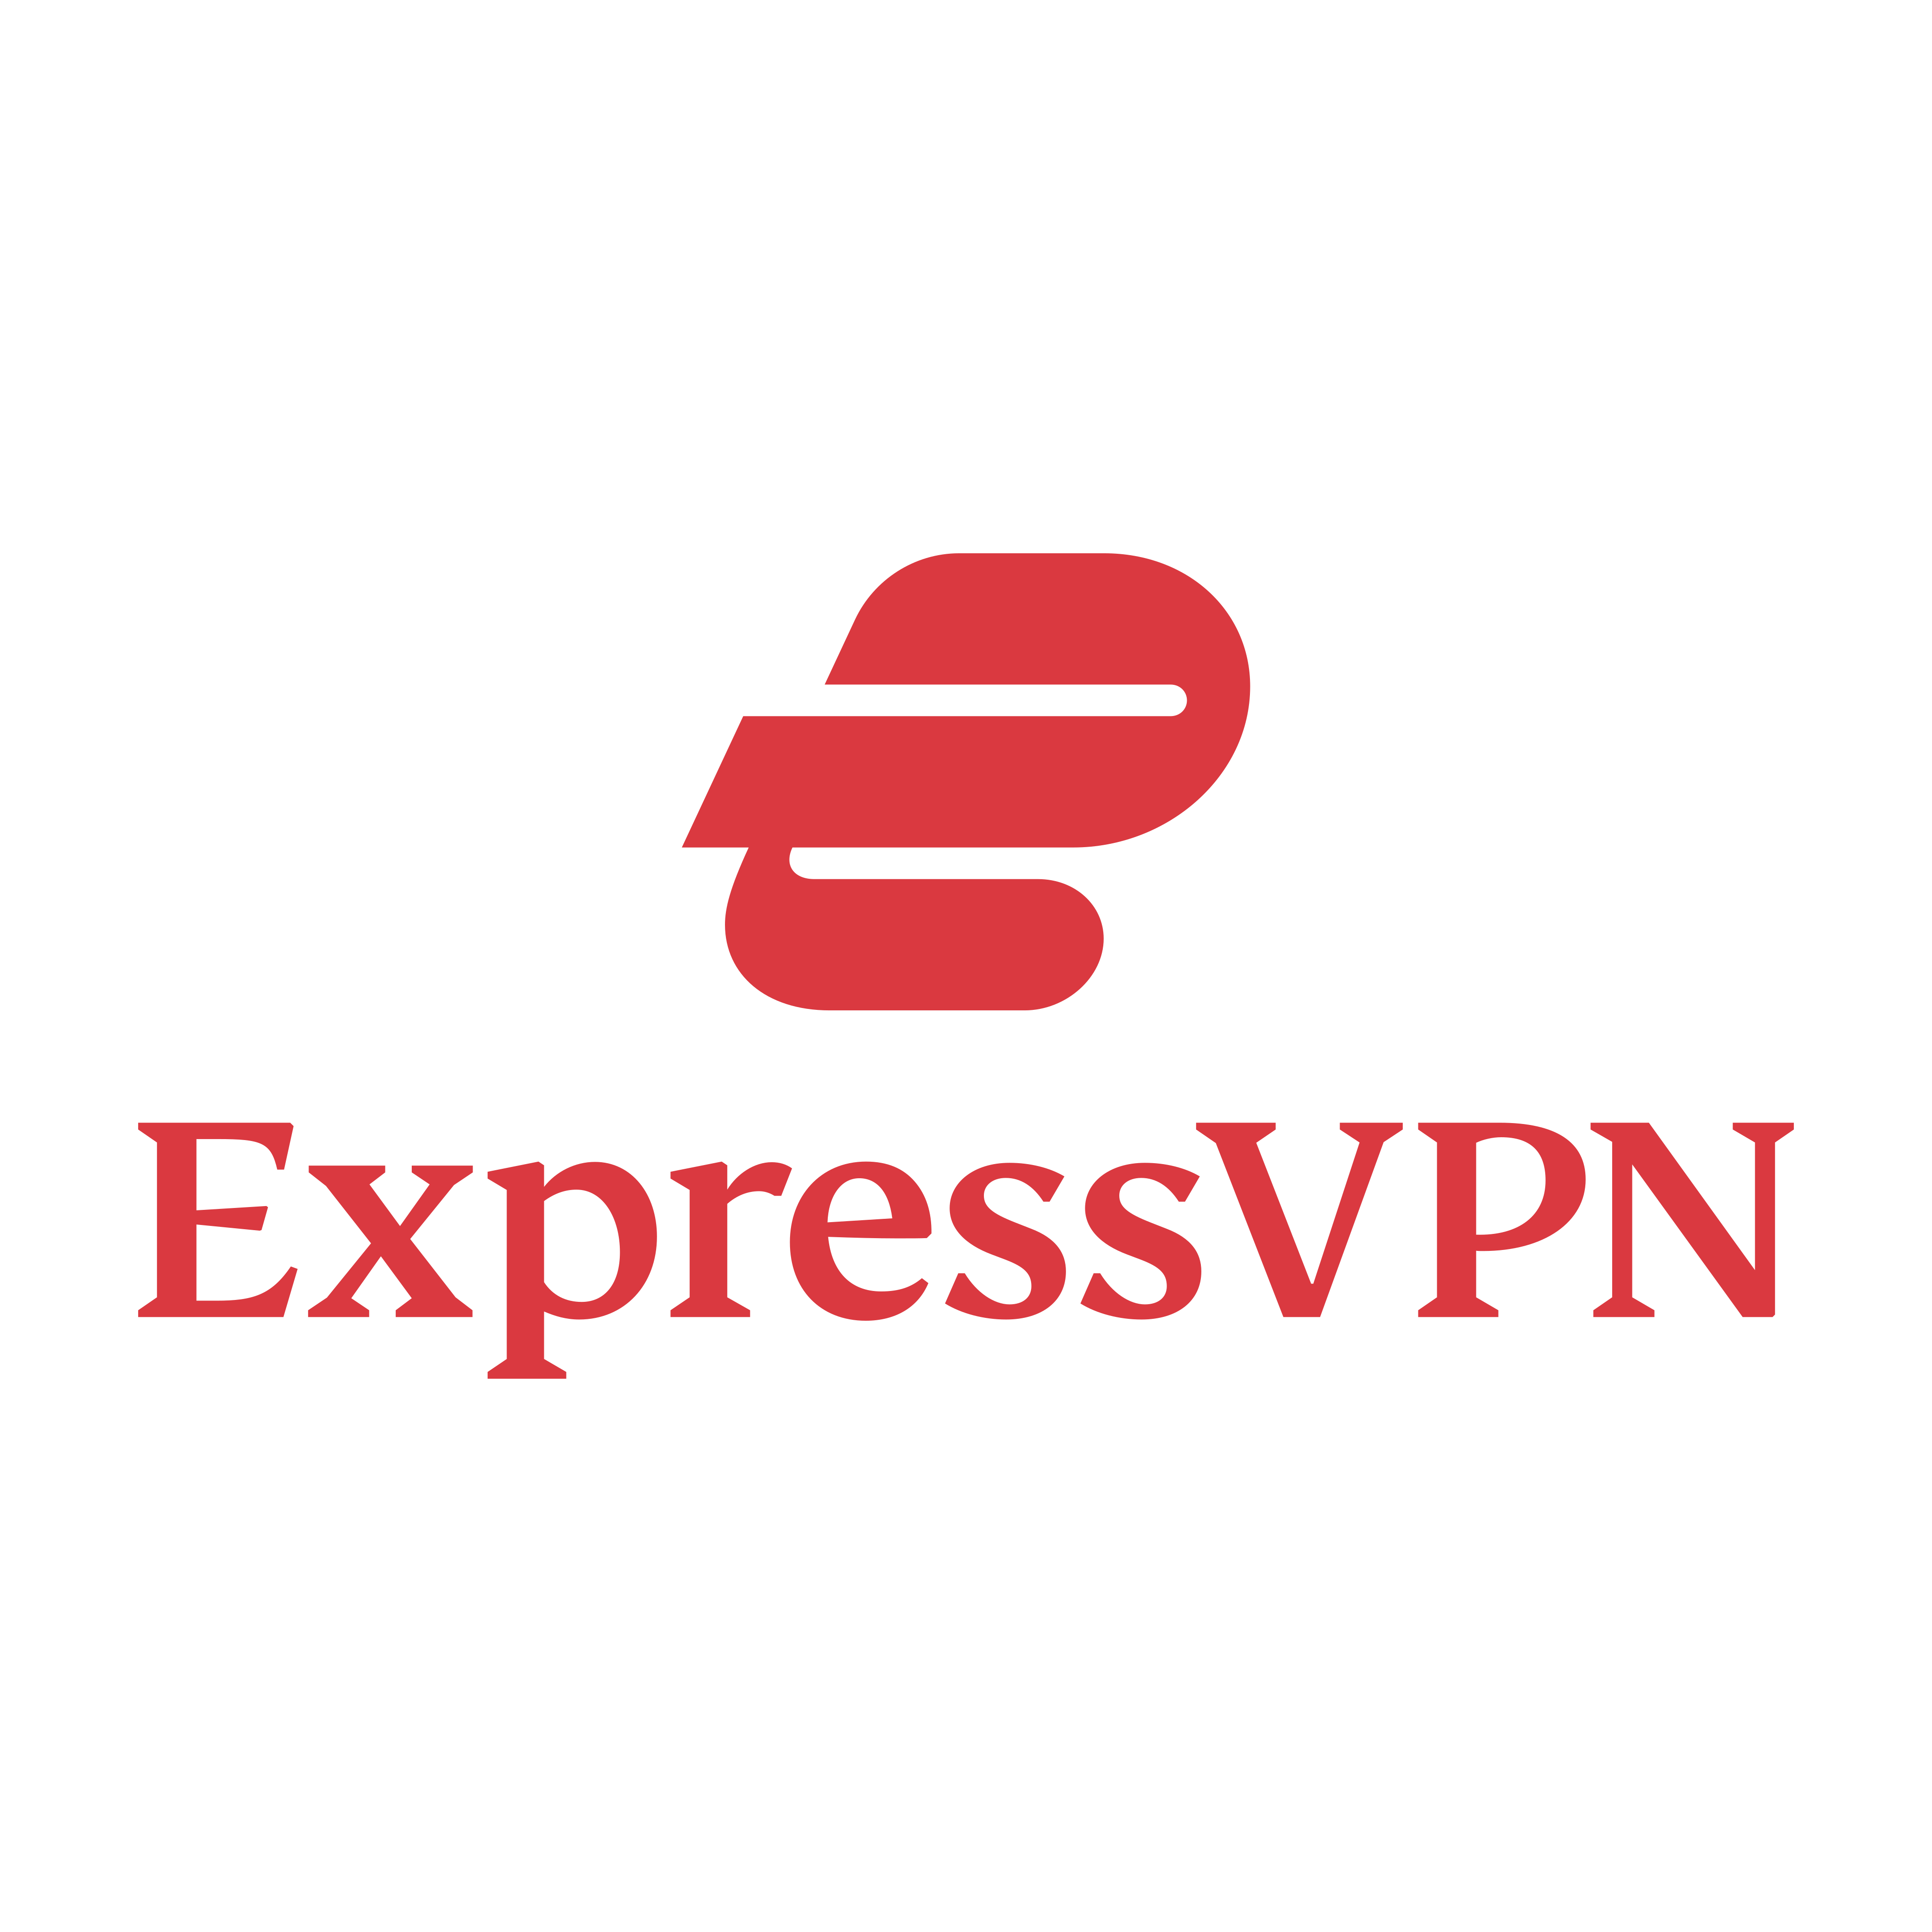 expressvpn logo 0 - ExpressVPN Logo